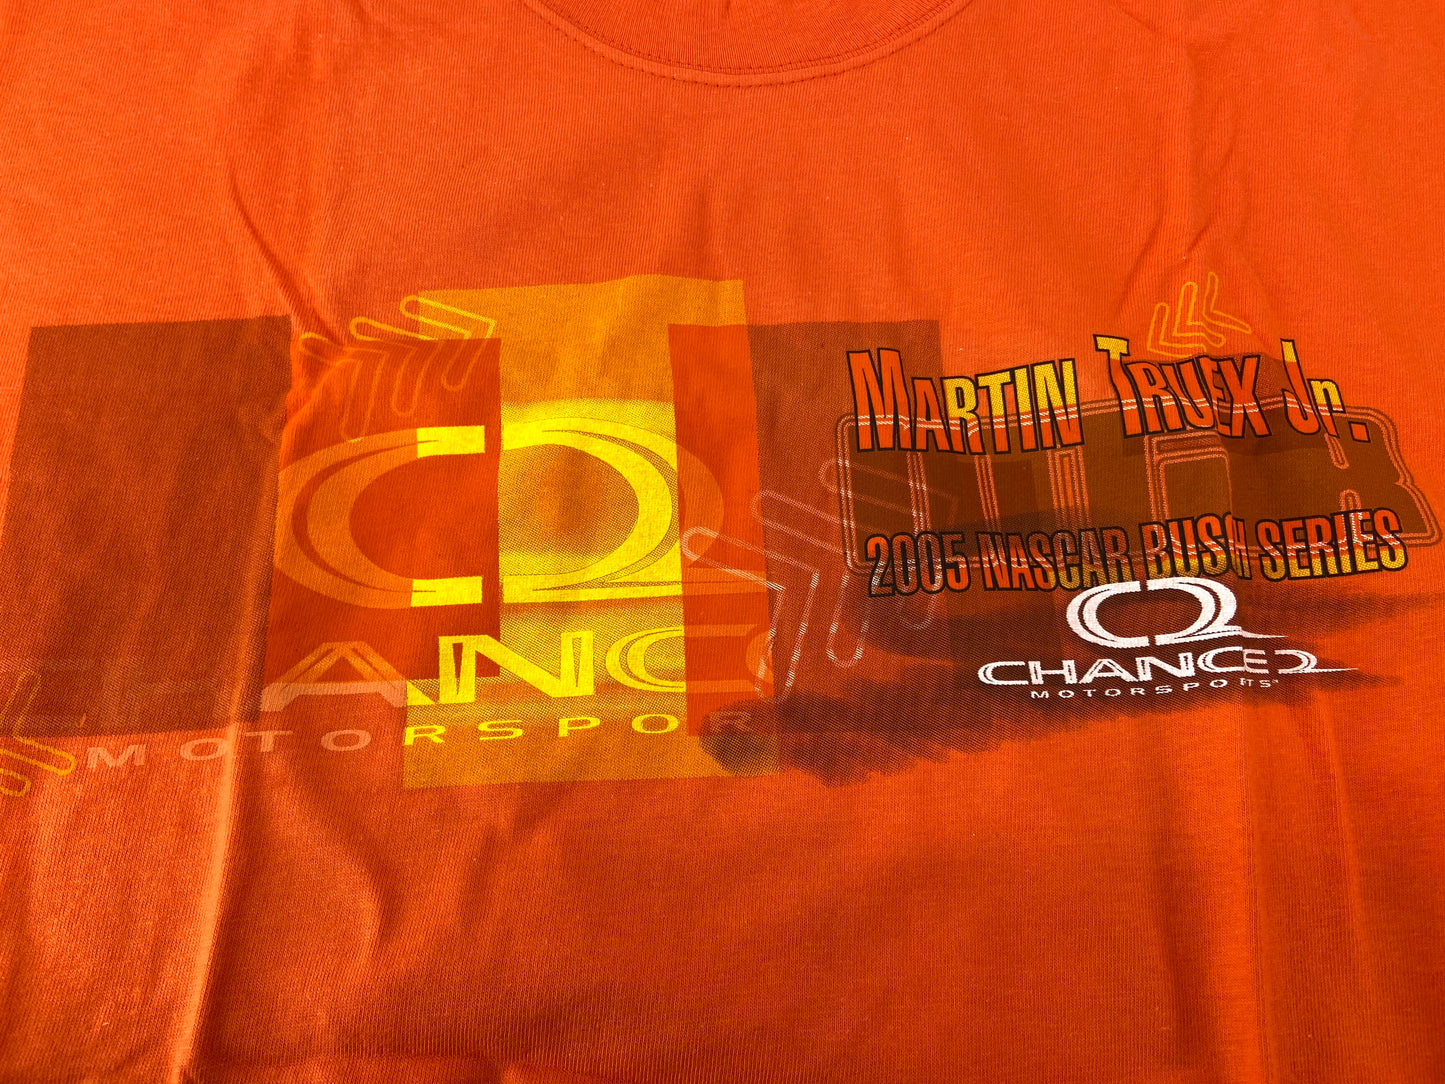 Martin Truex Jr. 2005 NASCAR Busch Series T-Shirt by Chase Authentics